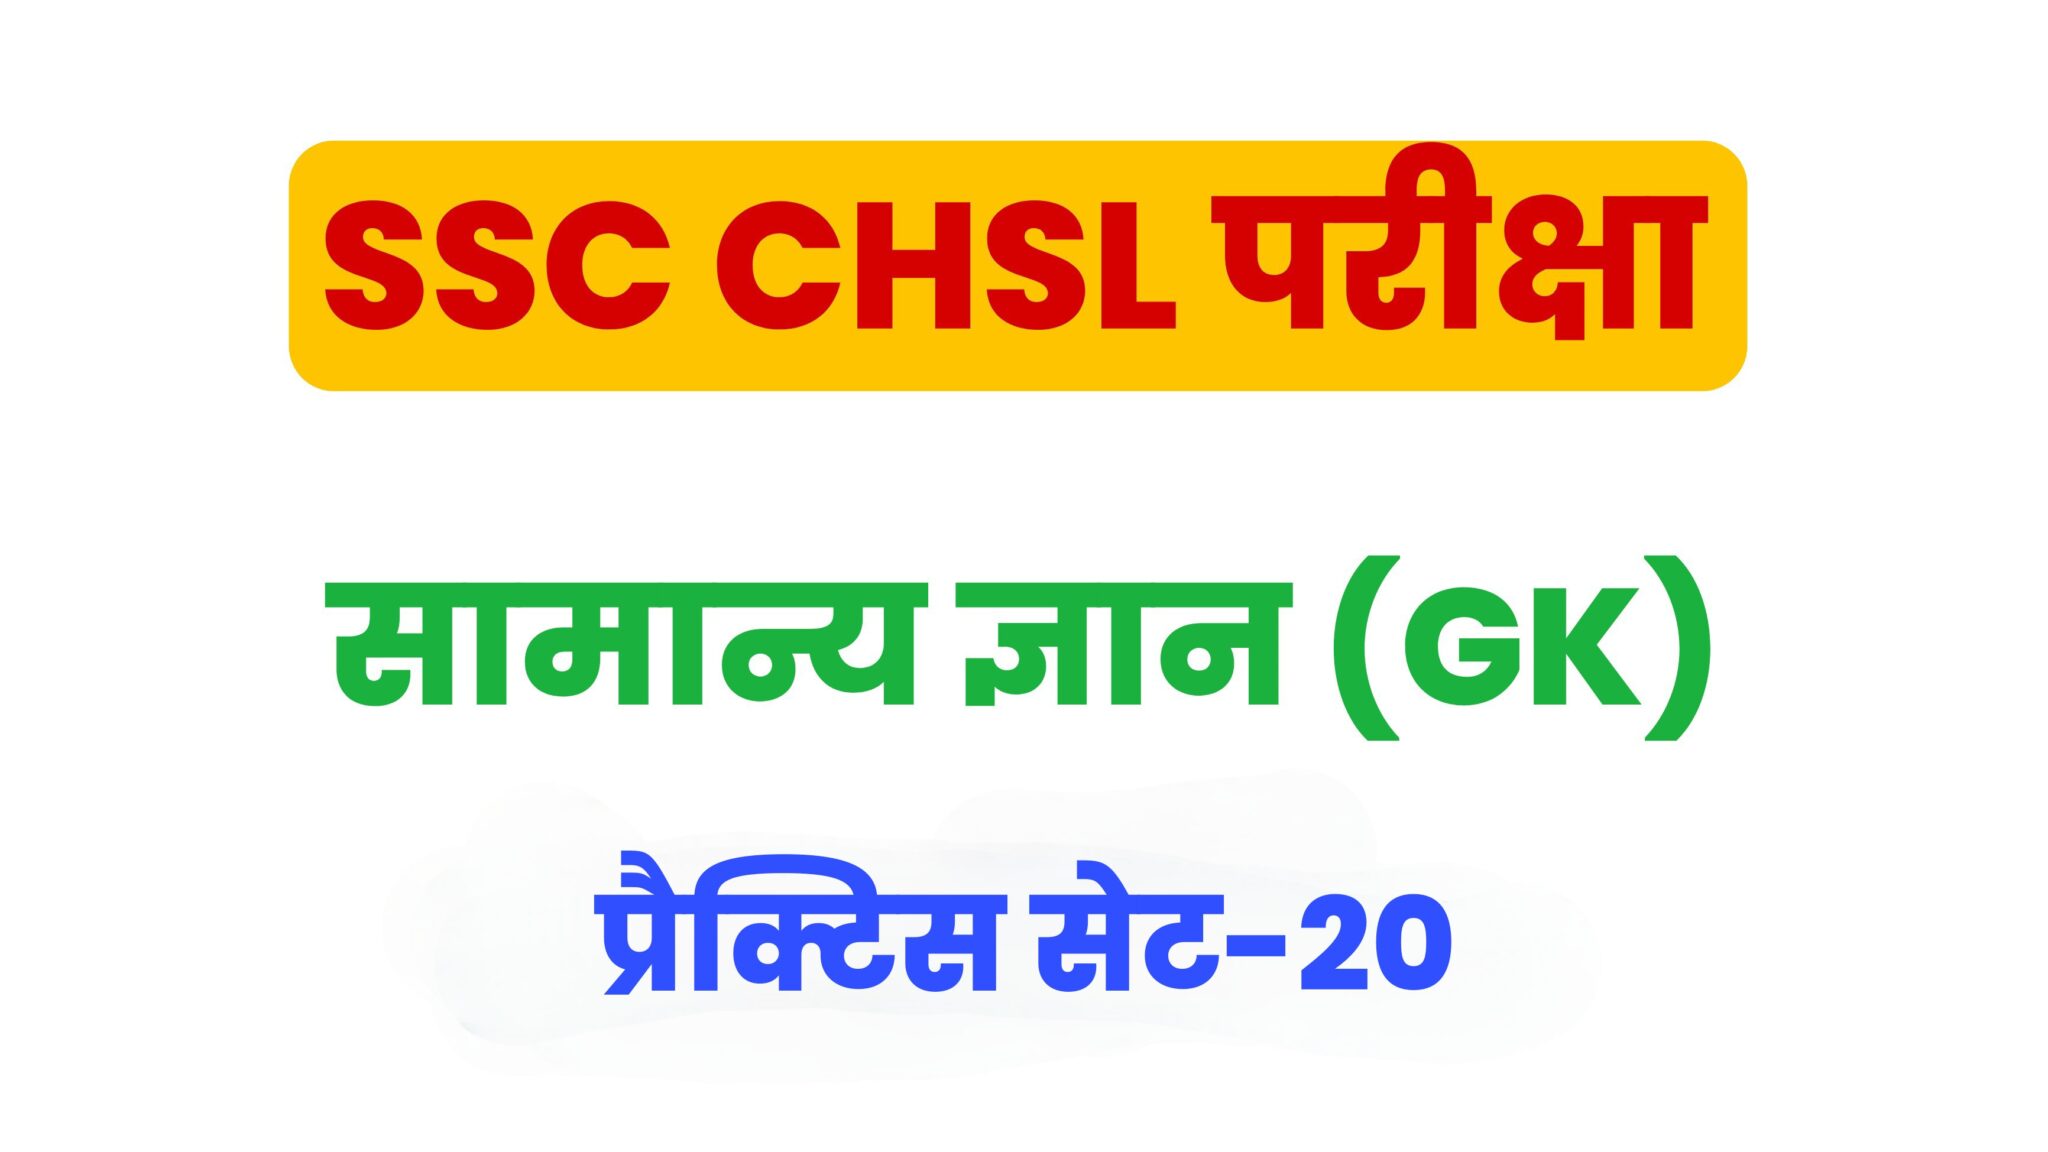 SSC CHSL GK/GS प्रैक्टिस सेट 20 : सामान्य ज्ञान के 25 बेहद महत्वपूर्ण प्रश्न